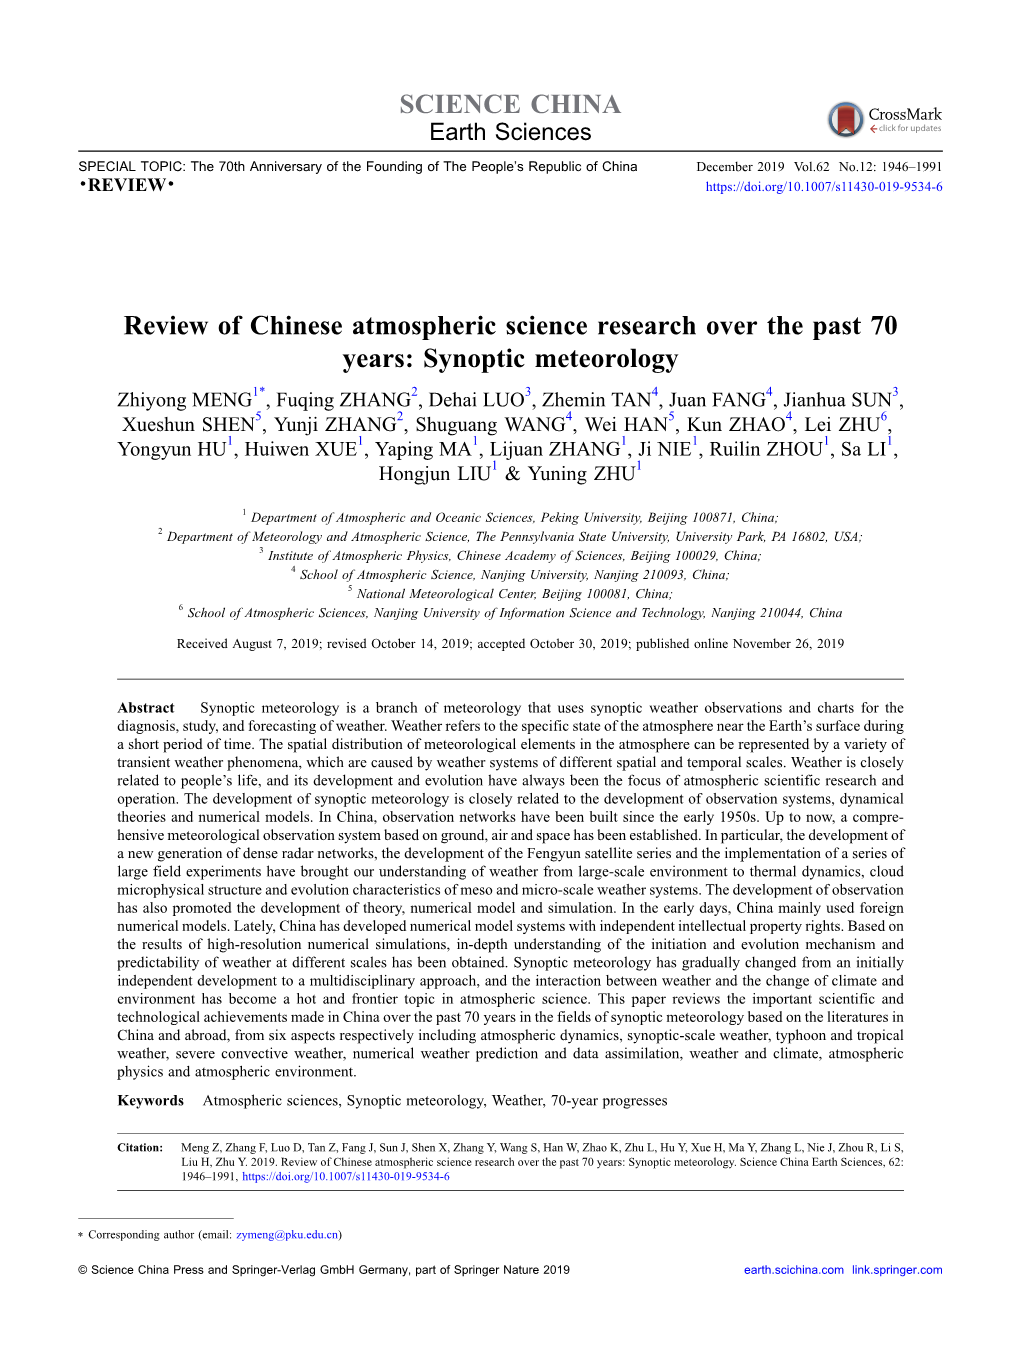 Synoptic Meteorology SCIENCE CHINA